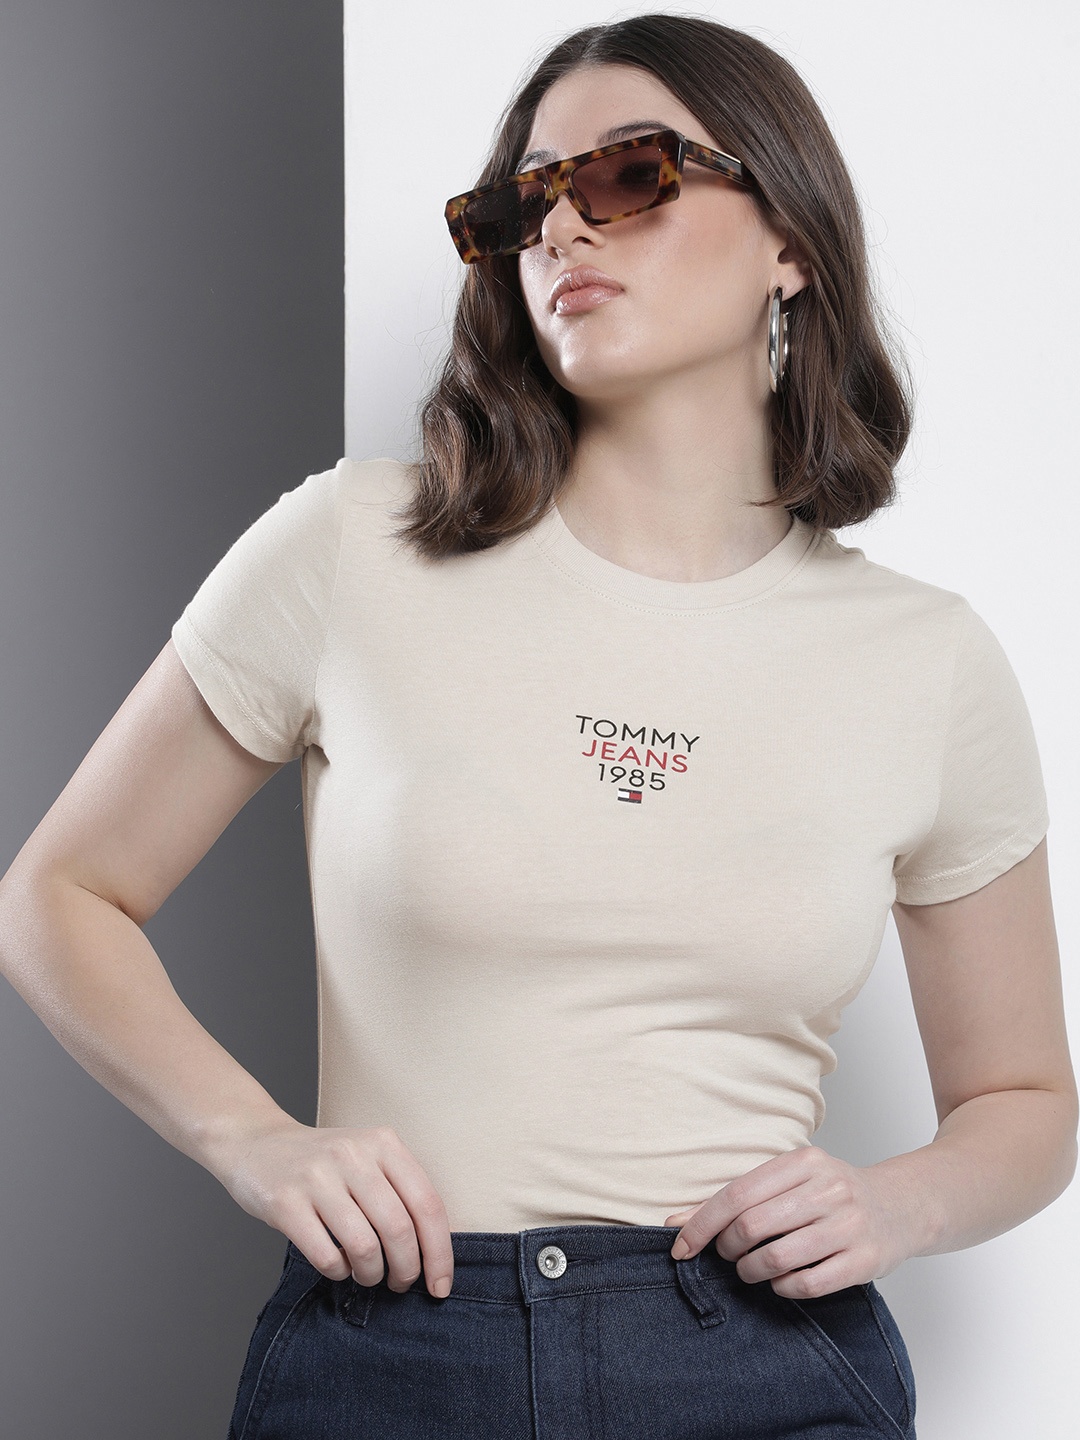 

Tommy Hilfiger Brand Logo Printed Slim Fit T-shirt, Beige